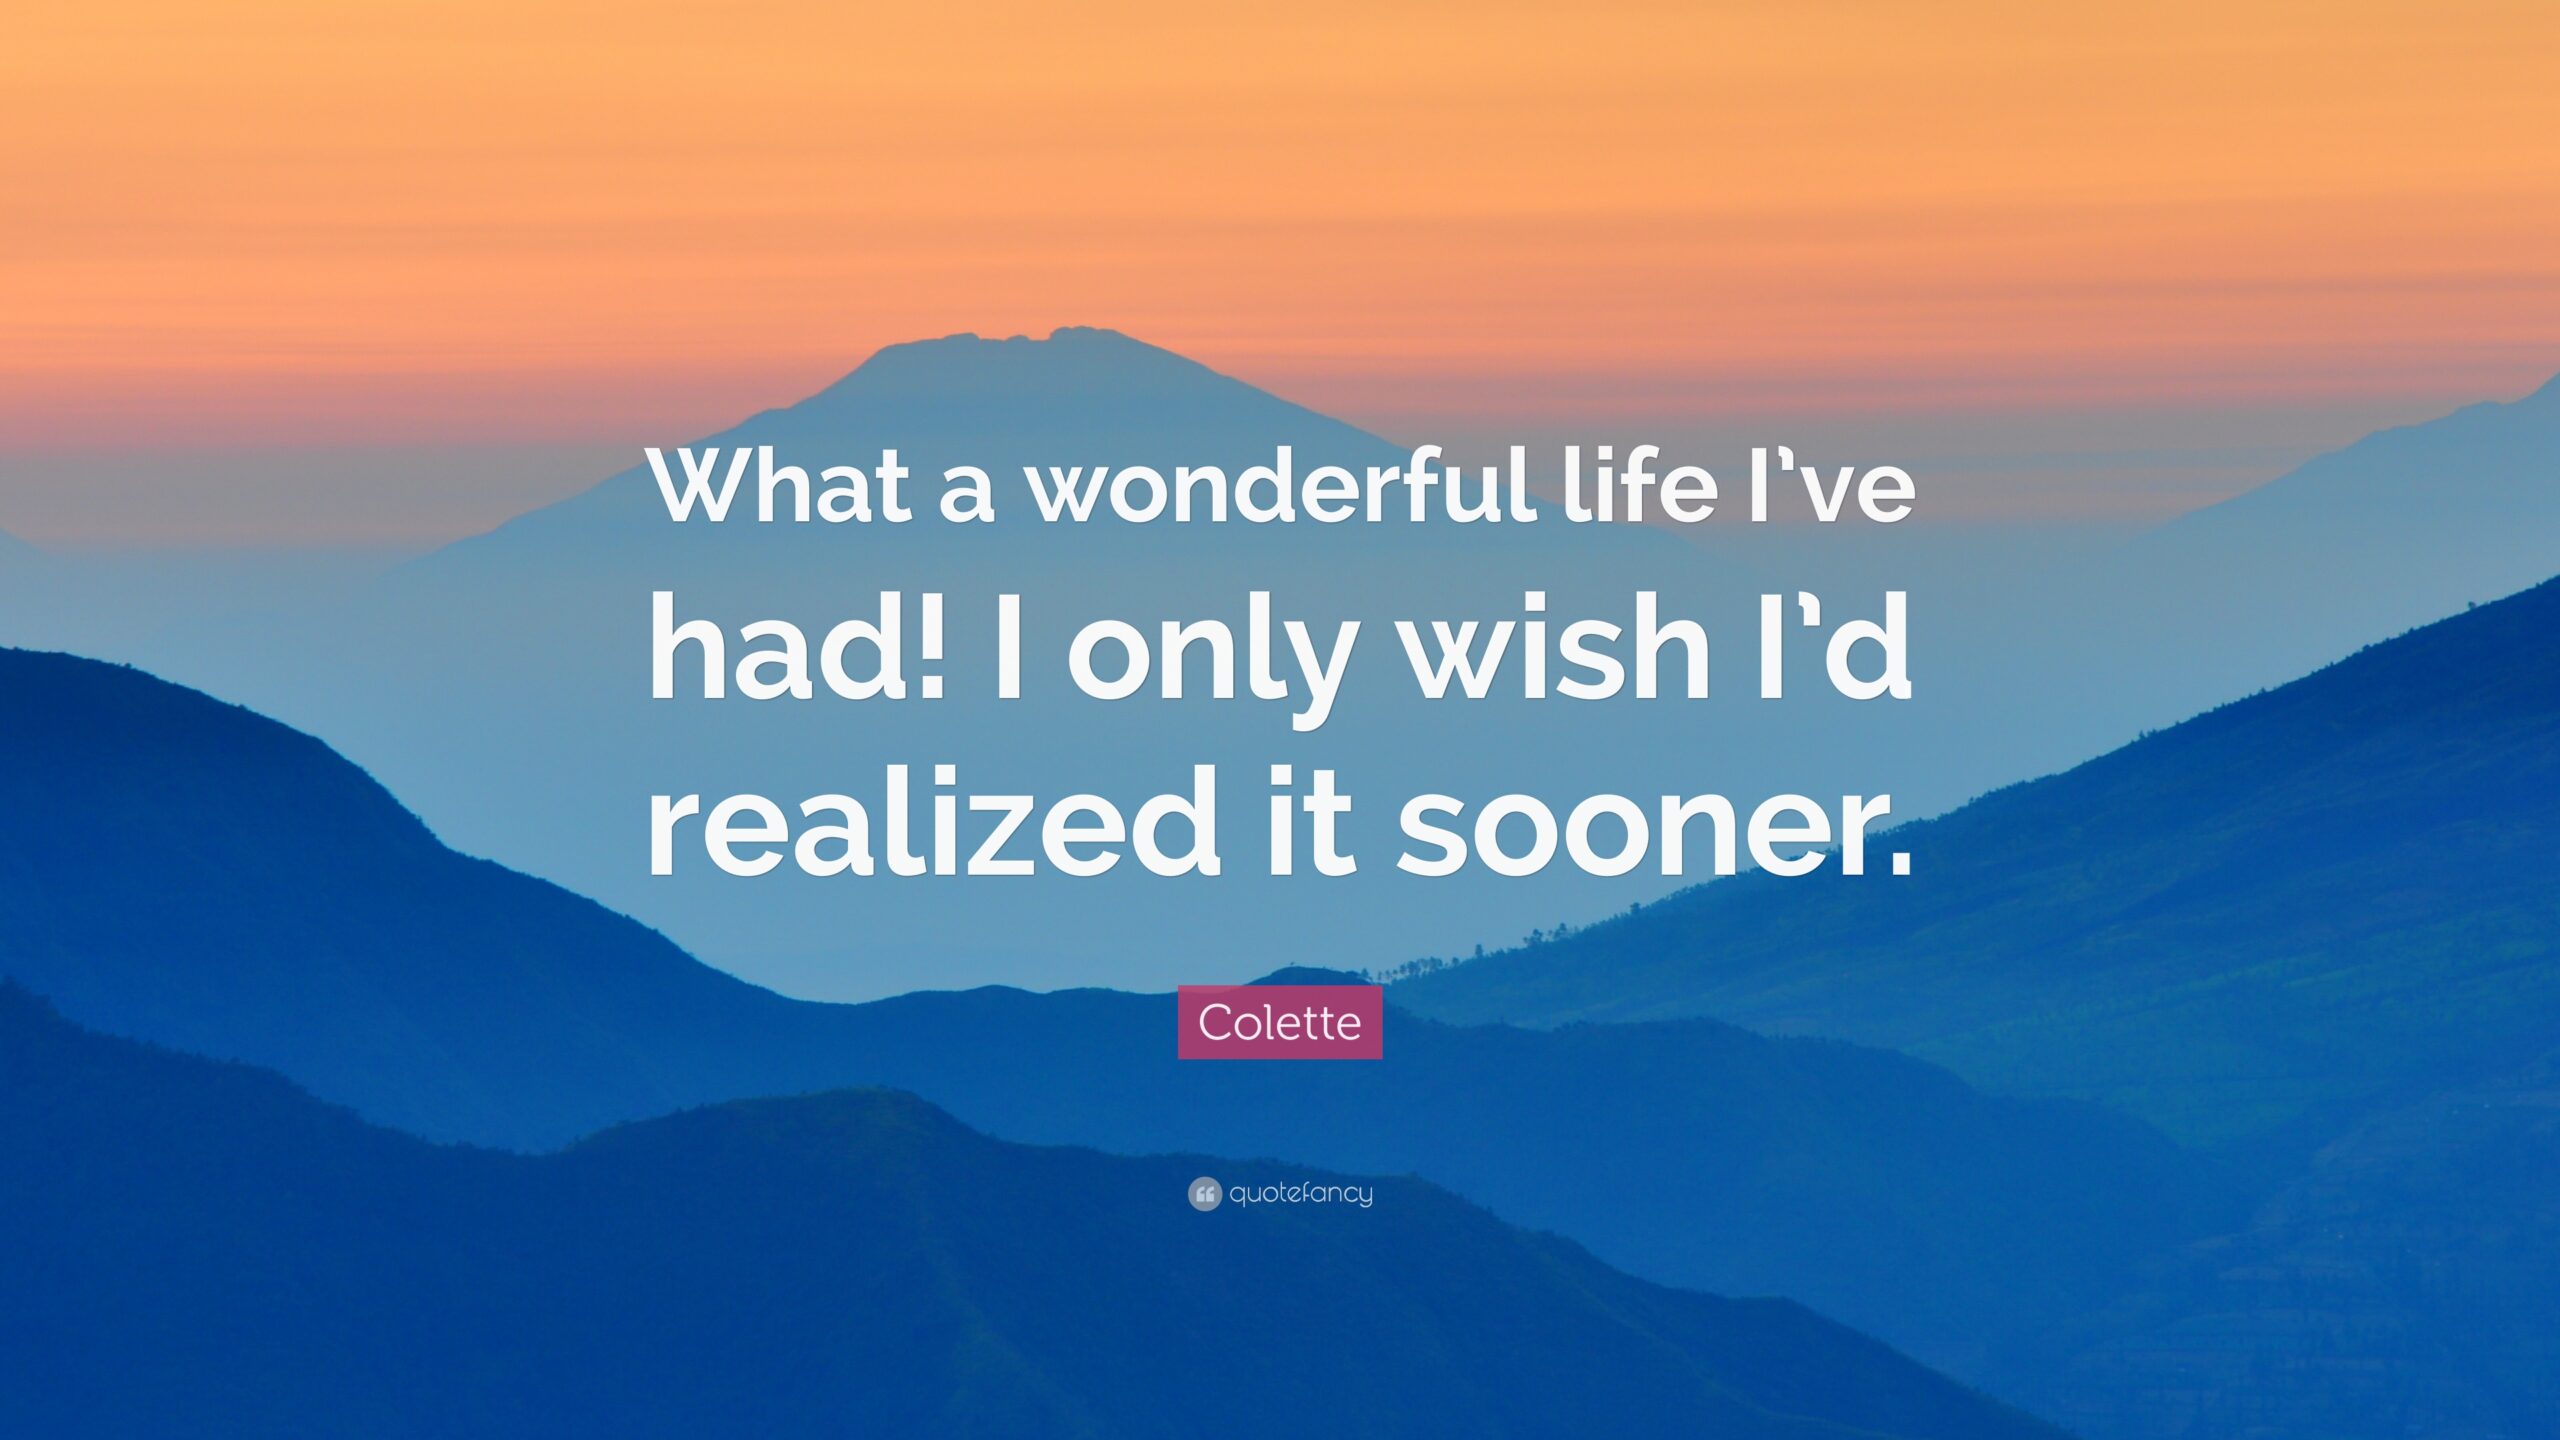 What a wonderful life I've had! I only wish I'd realized it sooner.